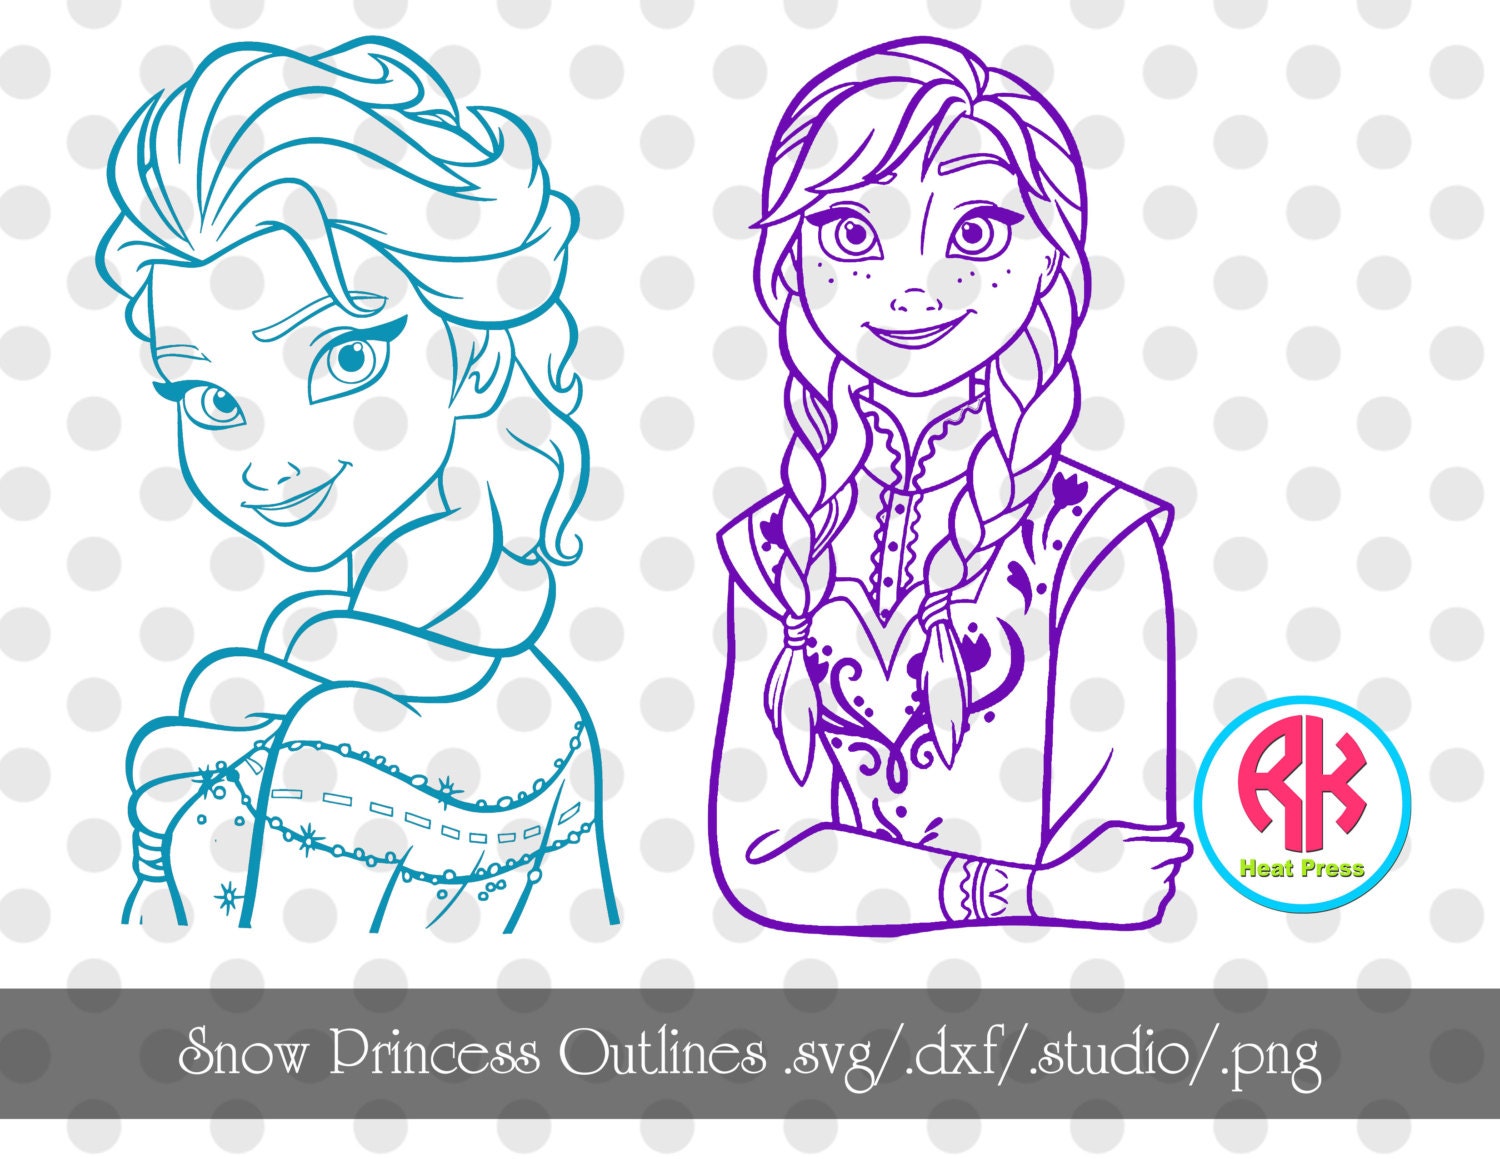 Download Snow Princess Outlines Cut Files Set .PNG .DXF by RKHeatPress